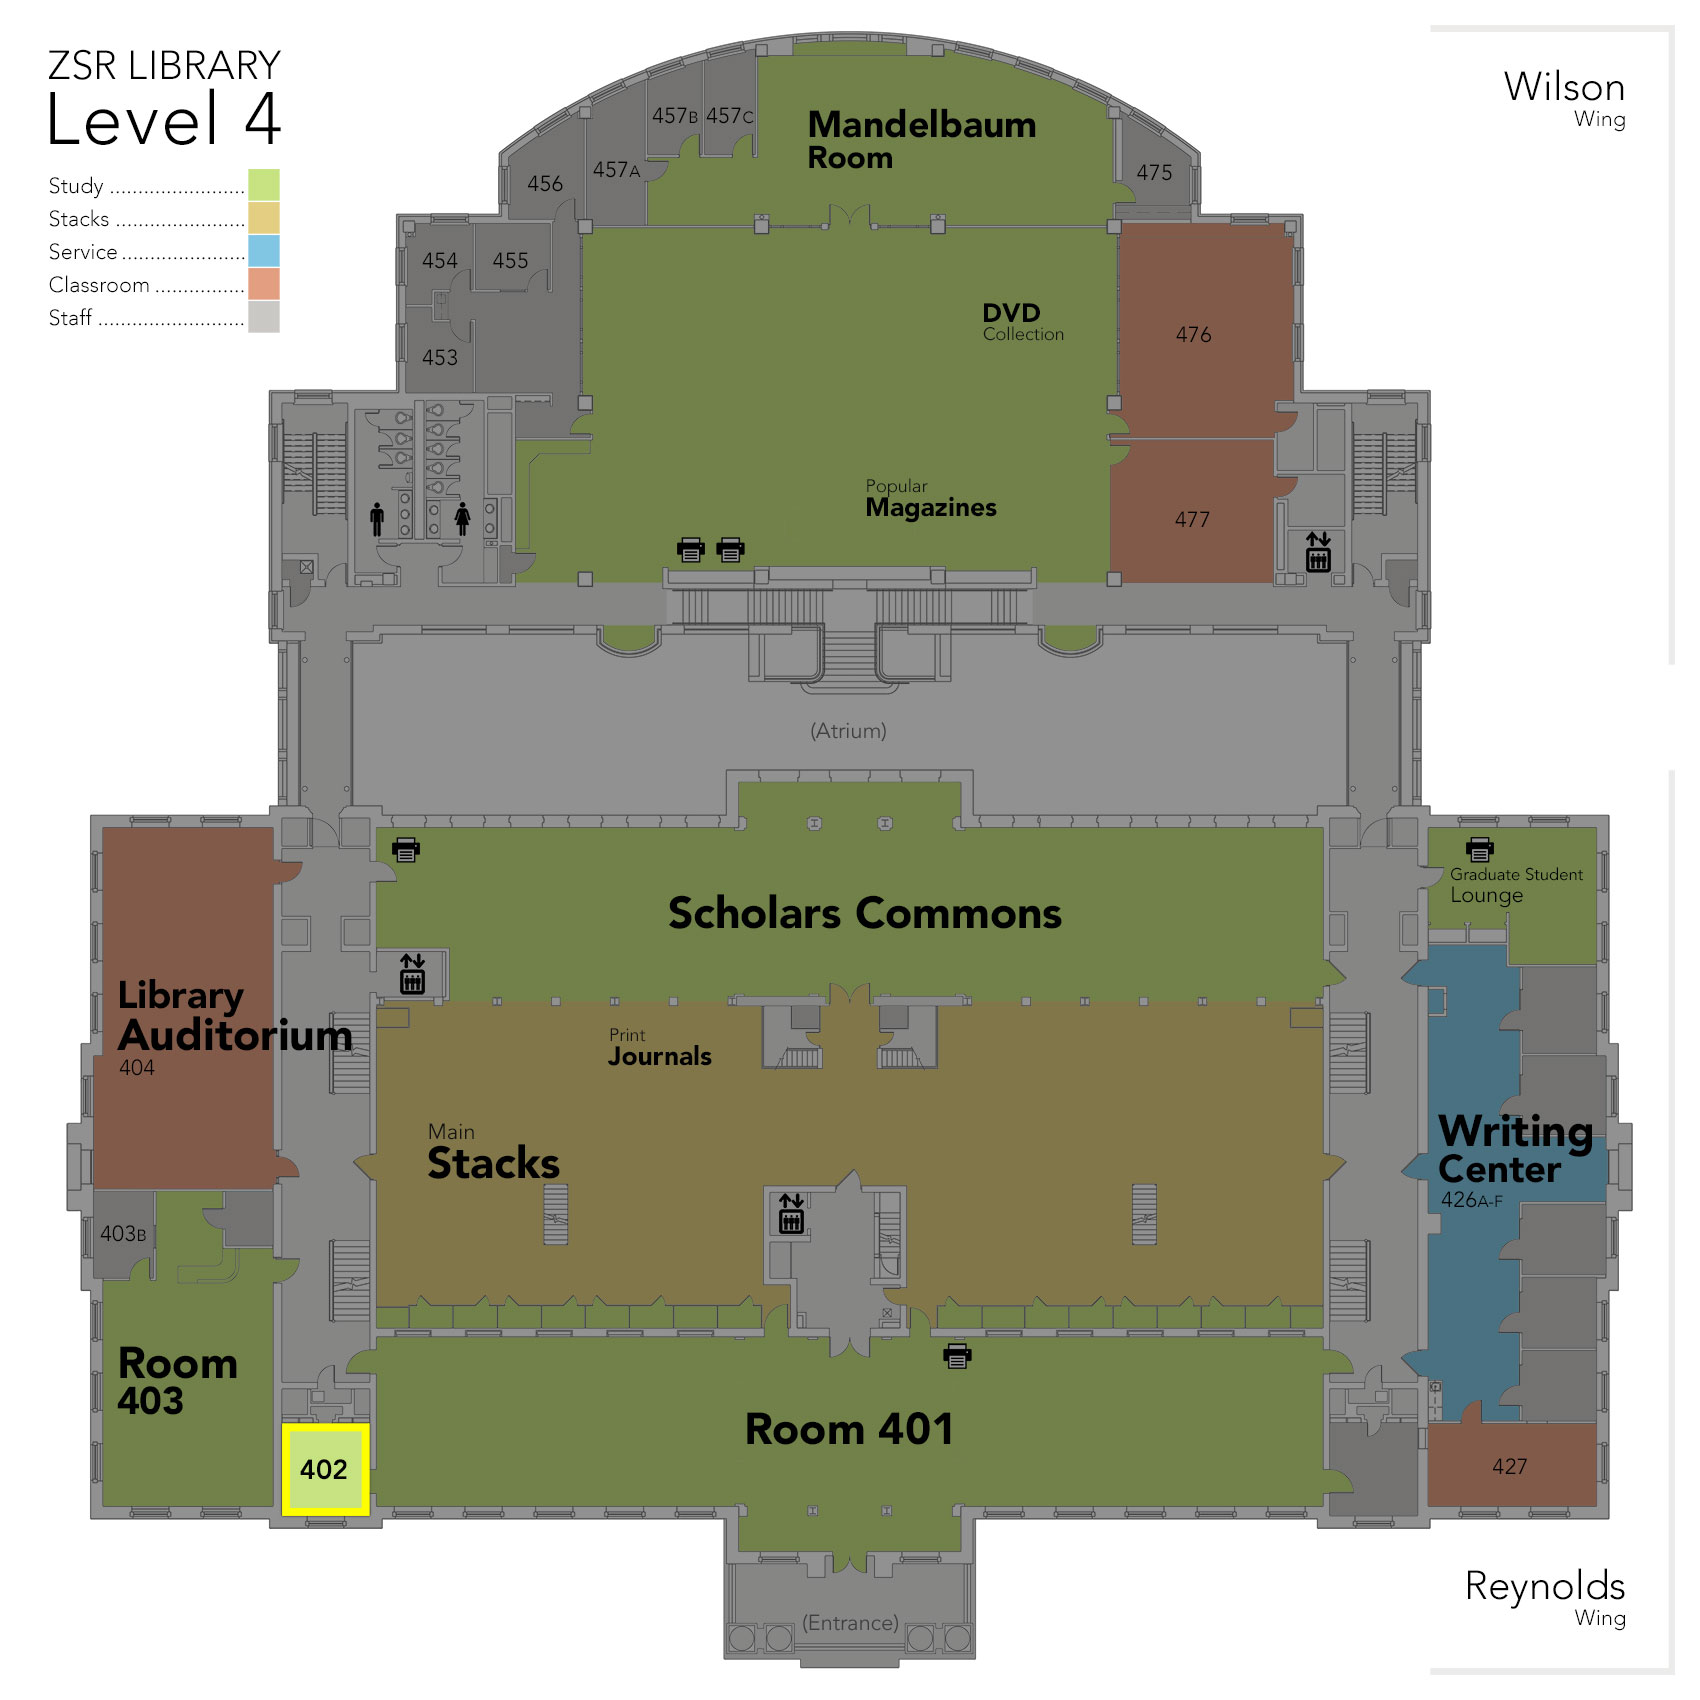 Level 4 Study Room 402 map